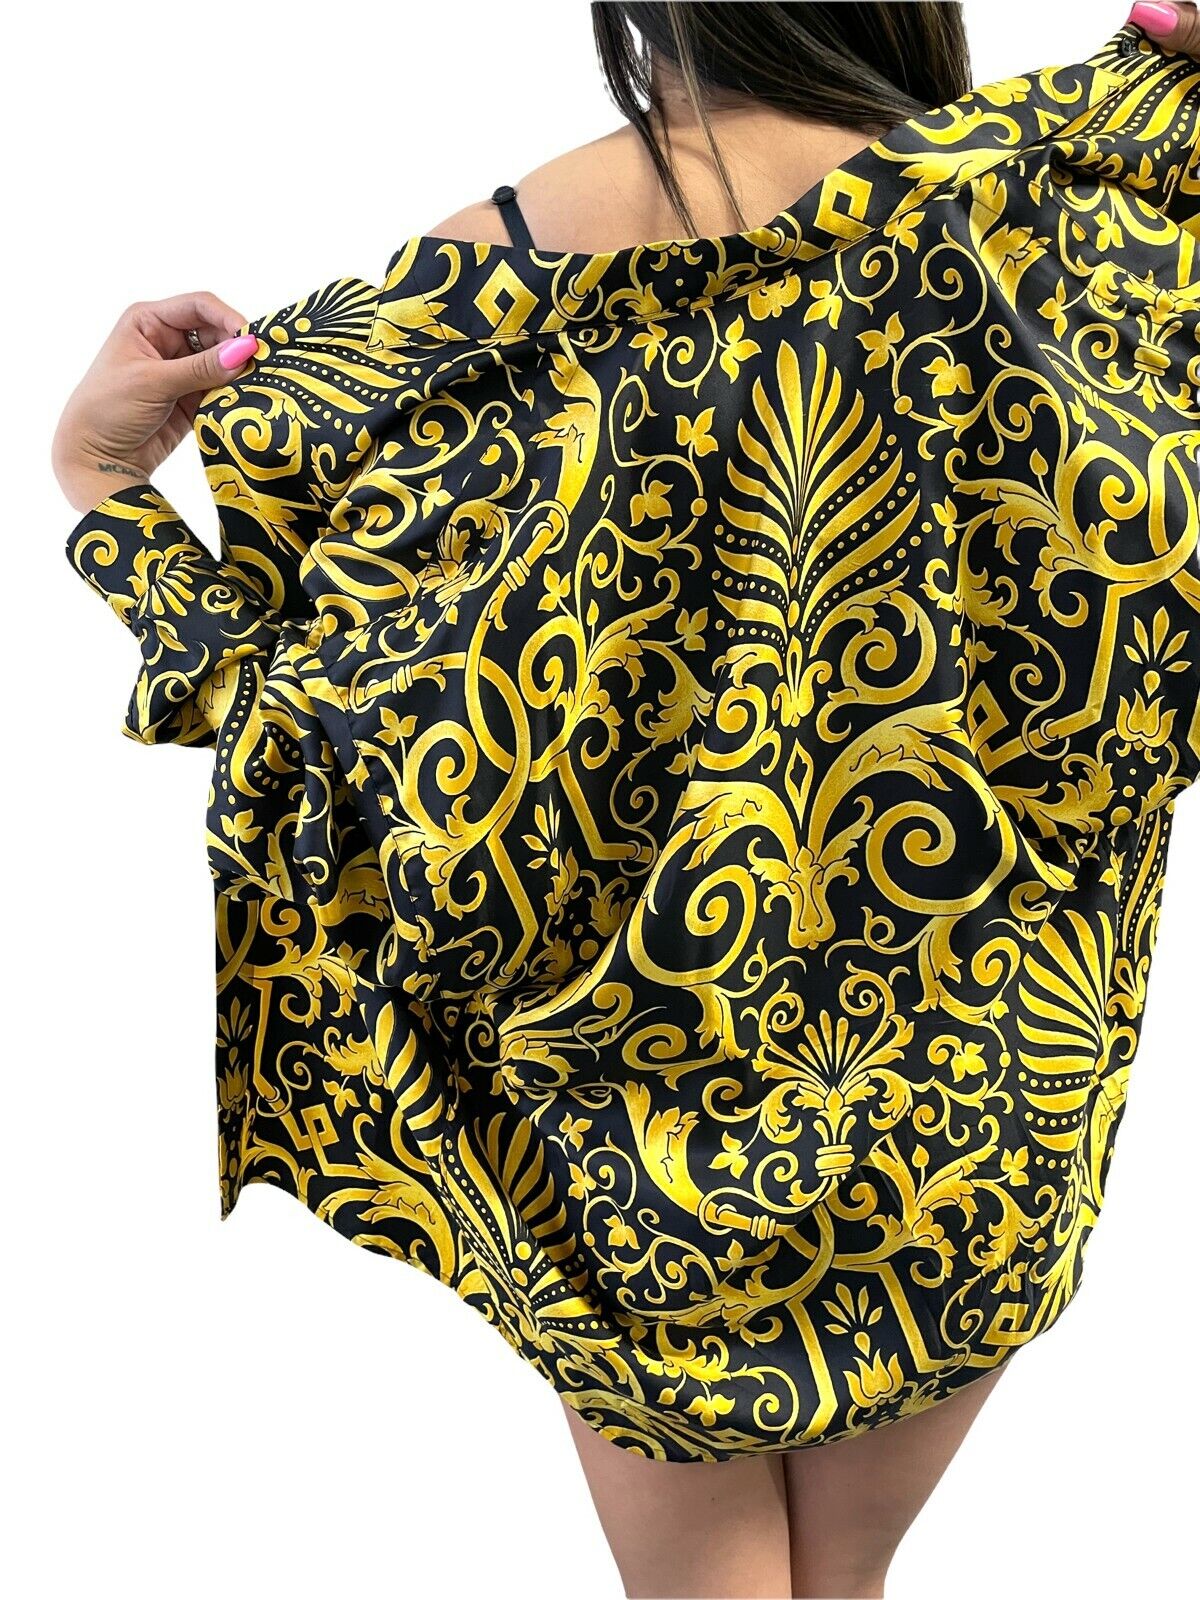 GIANNI VERSACE Vintage Silk Shirt Tops Unisex Button Down #46 Black Gold RankA